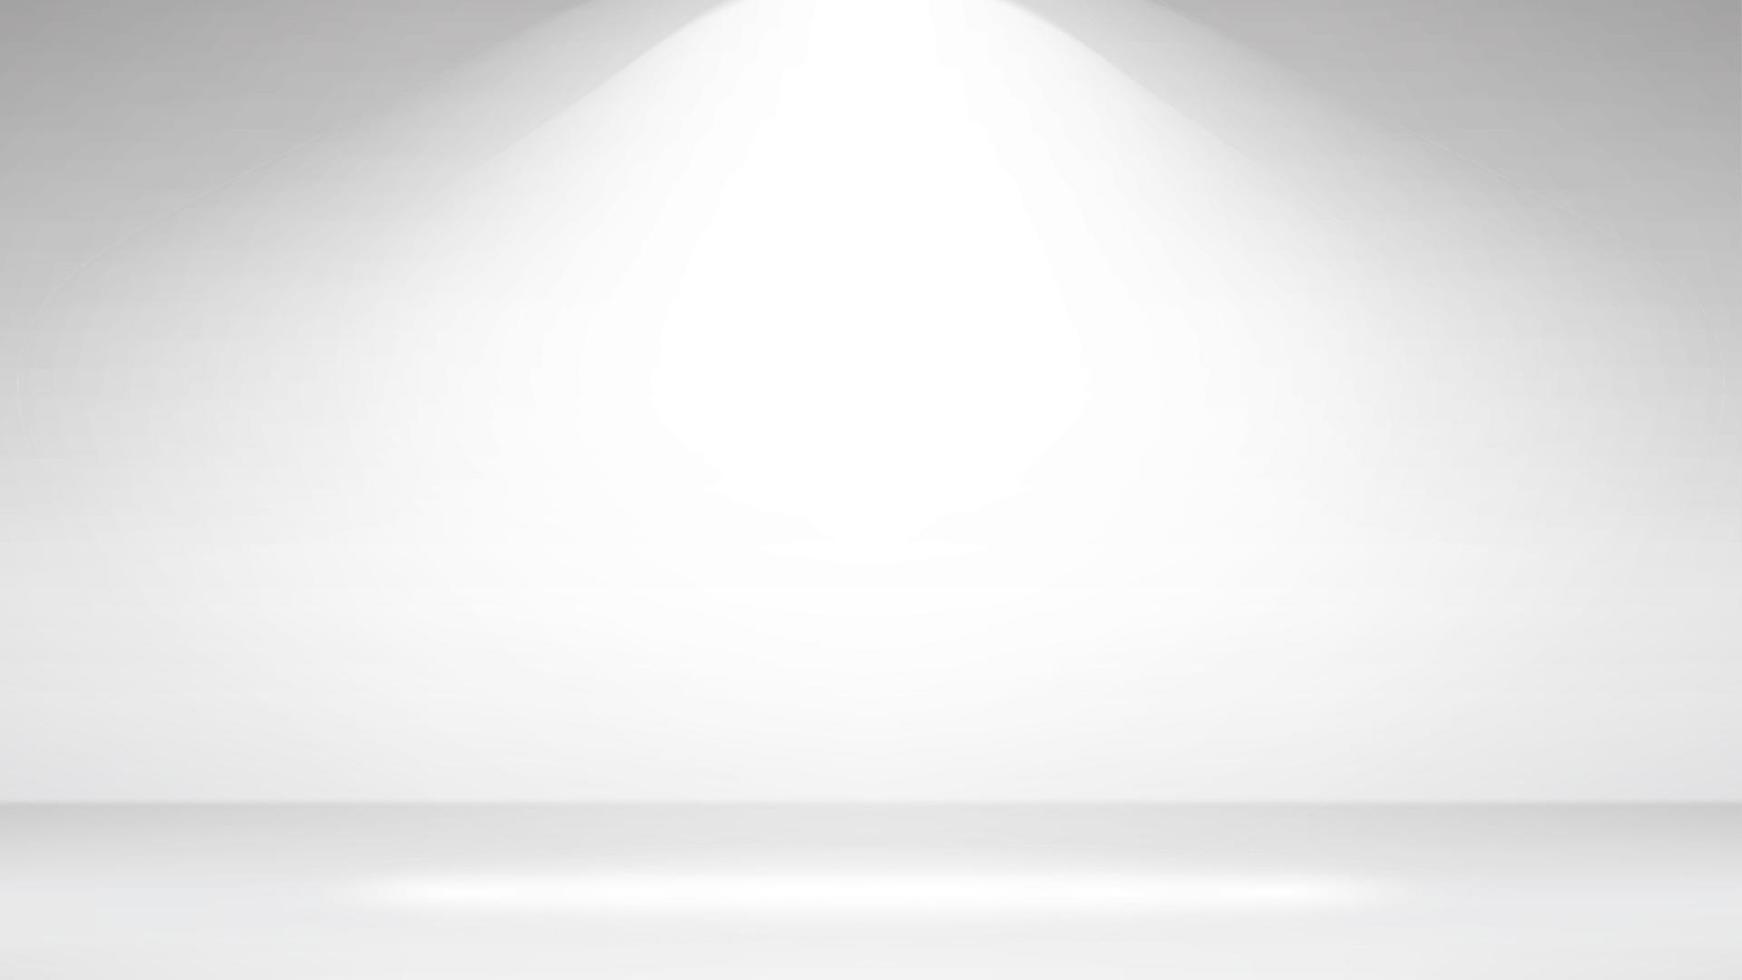 Empty White Photo Studio Interior Background. Realistic Empty White Wall. Vector Illustration.